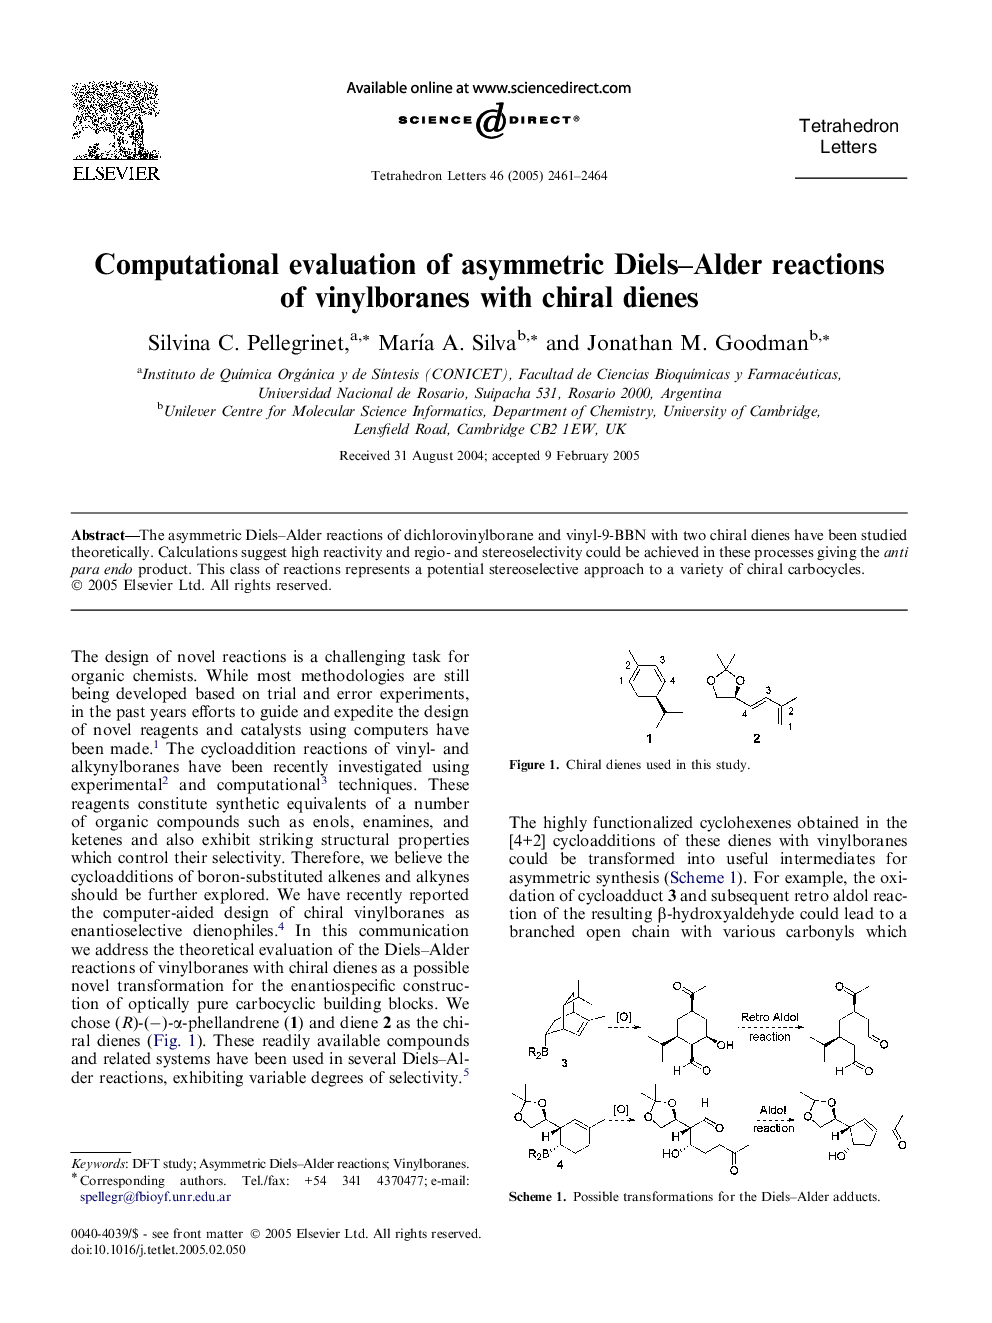 Computational evaluation of asymmetric Diels-Alder reactions of vinylboranes with chiral dienes